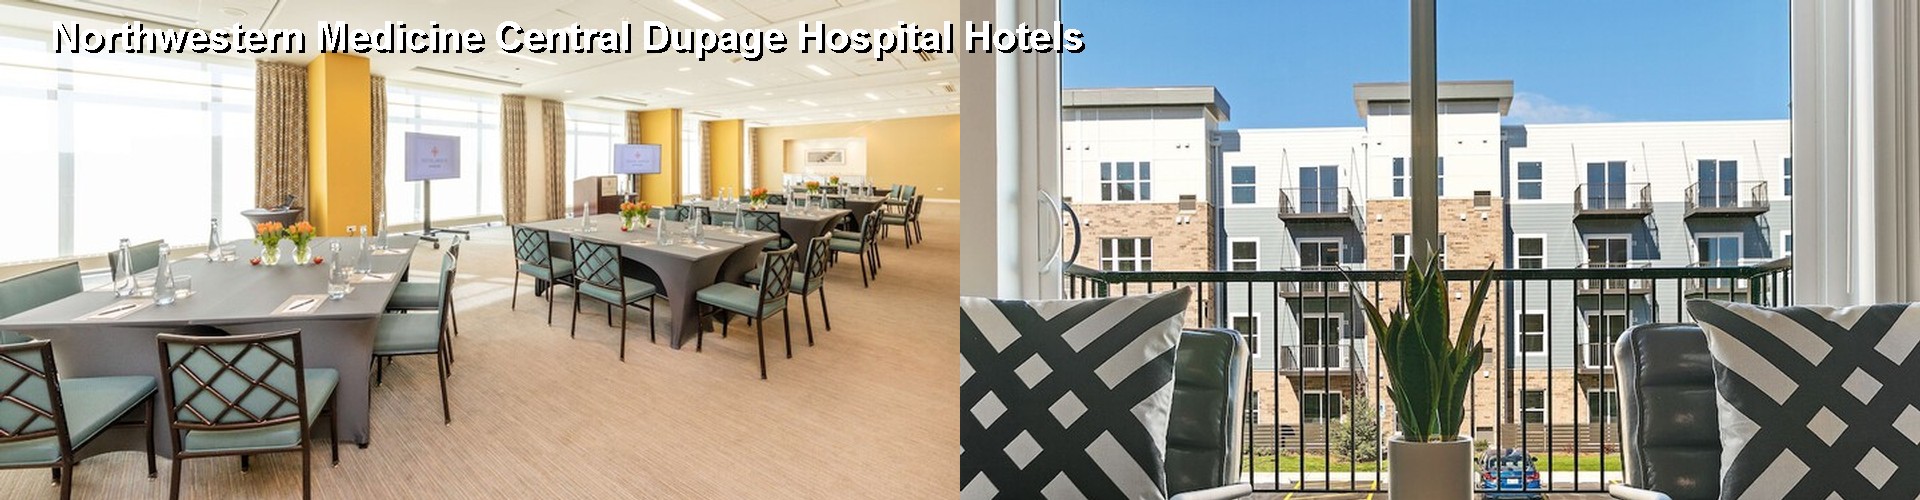 5 Best Hotels near Northwestern Medicine Central Dupage Hospital